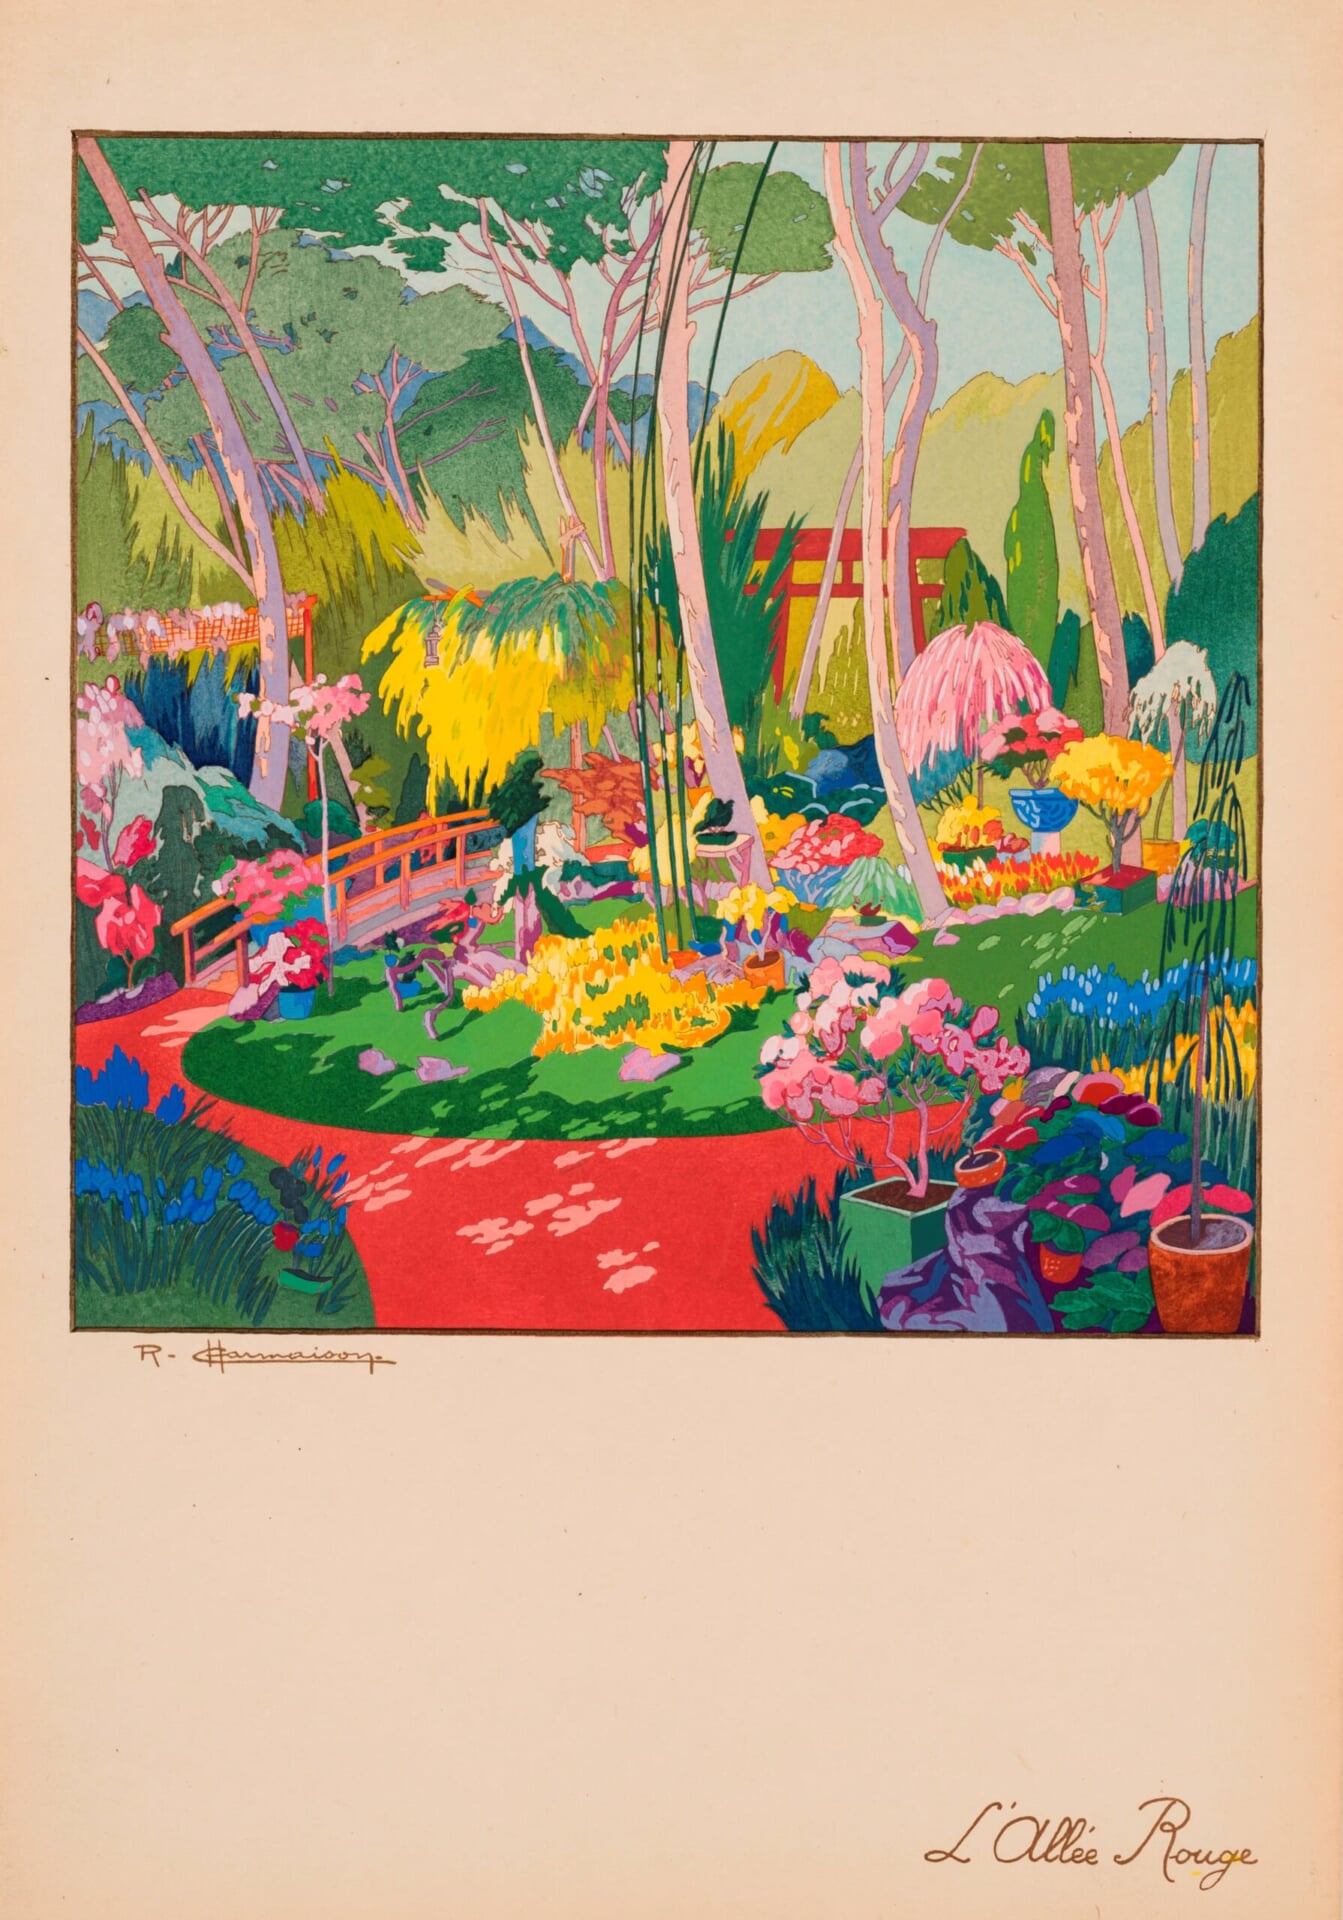 Raymond CHARMAISON, Red Alley, Precious Gardens, 1919. Collection of Tokyo Metropolitan Teien Art Museum